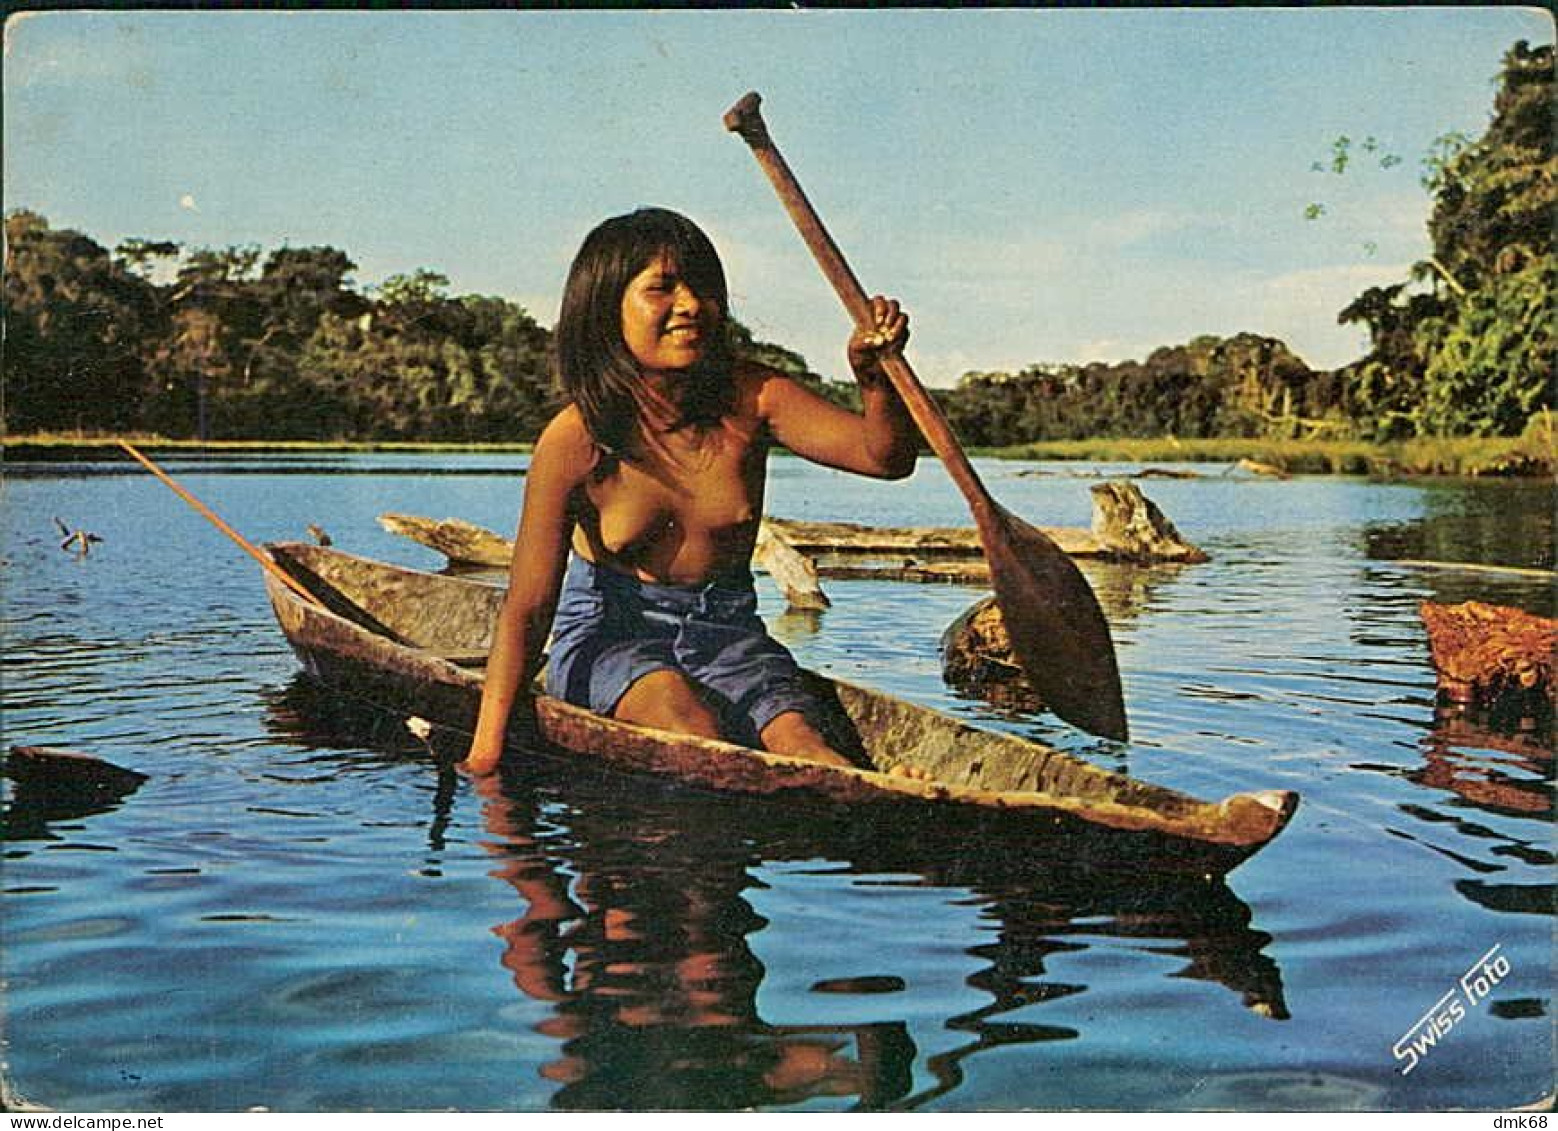 PERU - AMAZON JUNGLE - HALF NAKED / NUDE / NU JIBARO GIRL IN A CANOE - MAILED 1979 / RED POSTMARK (18045) - América